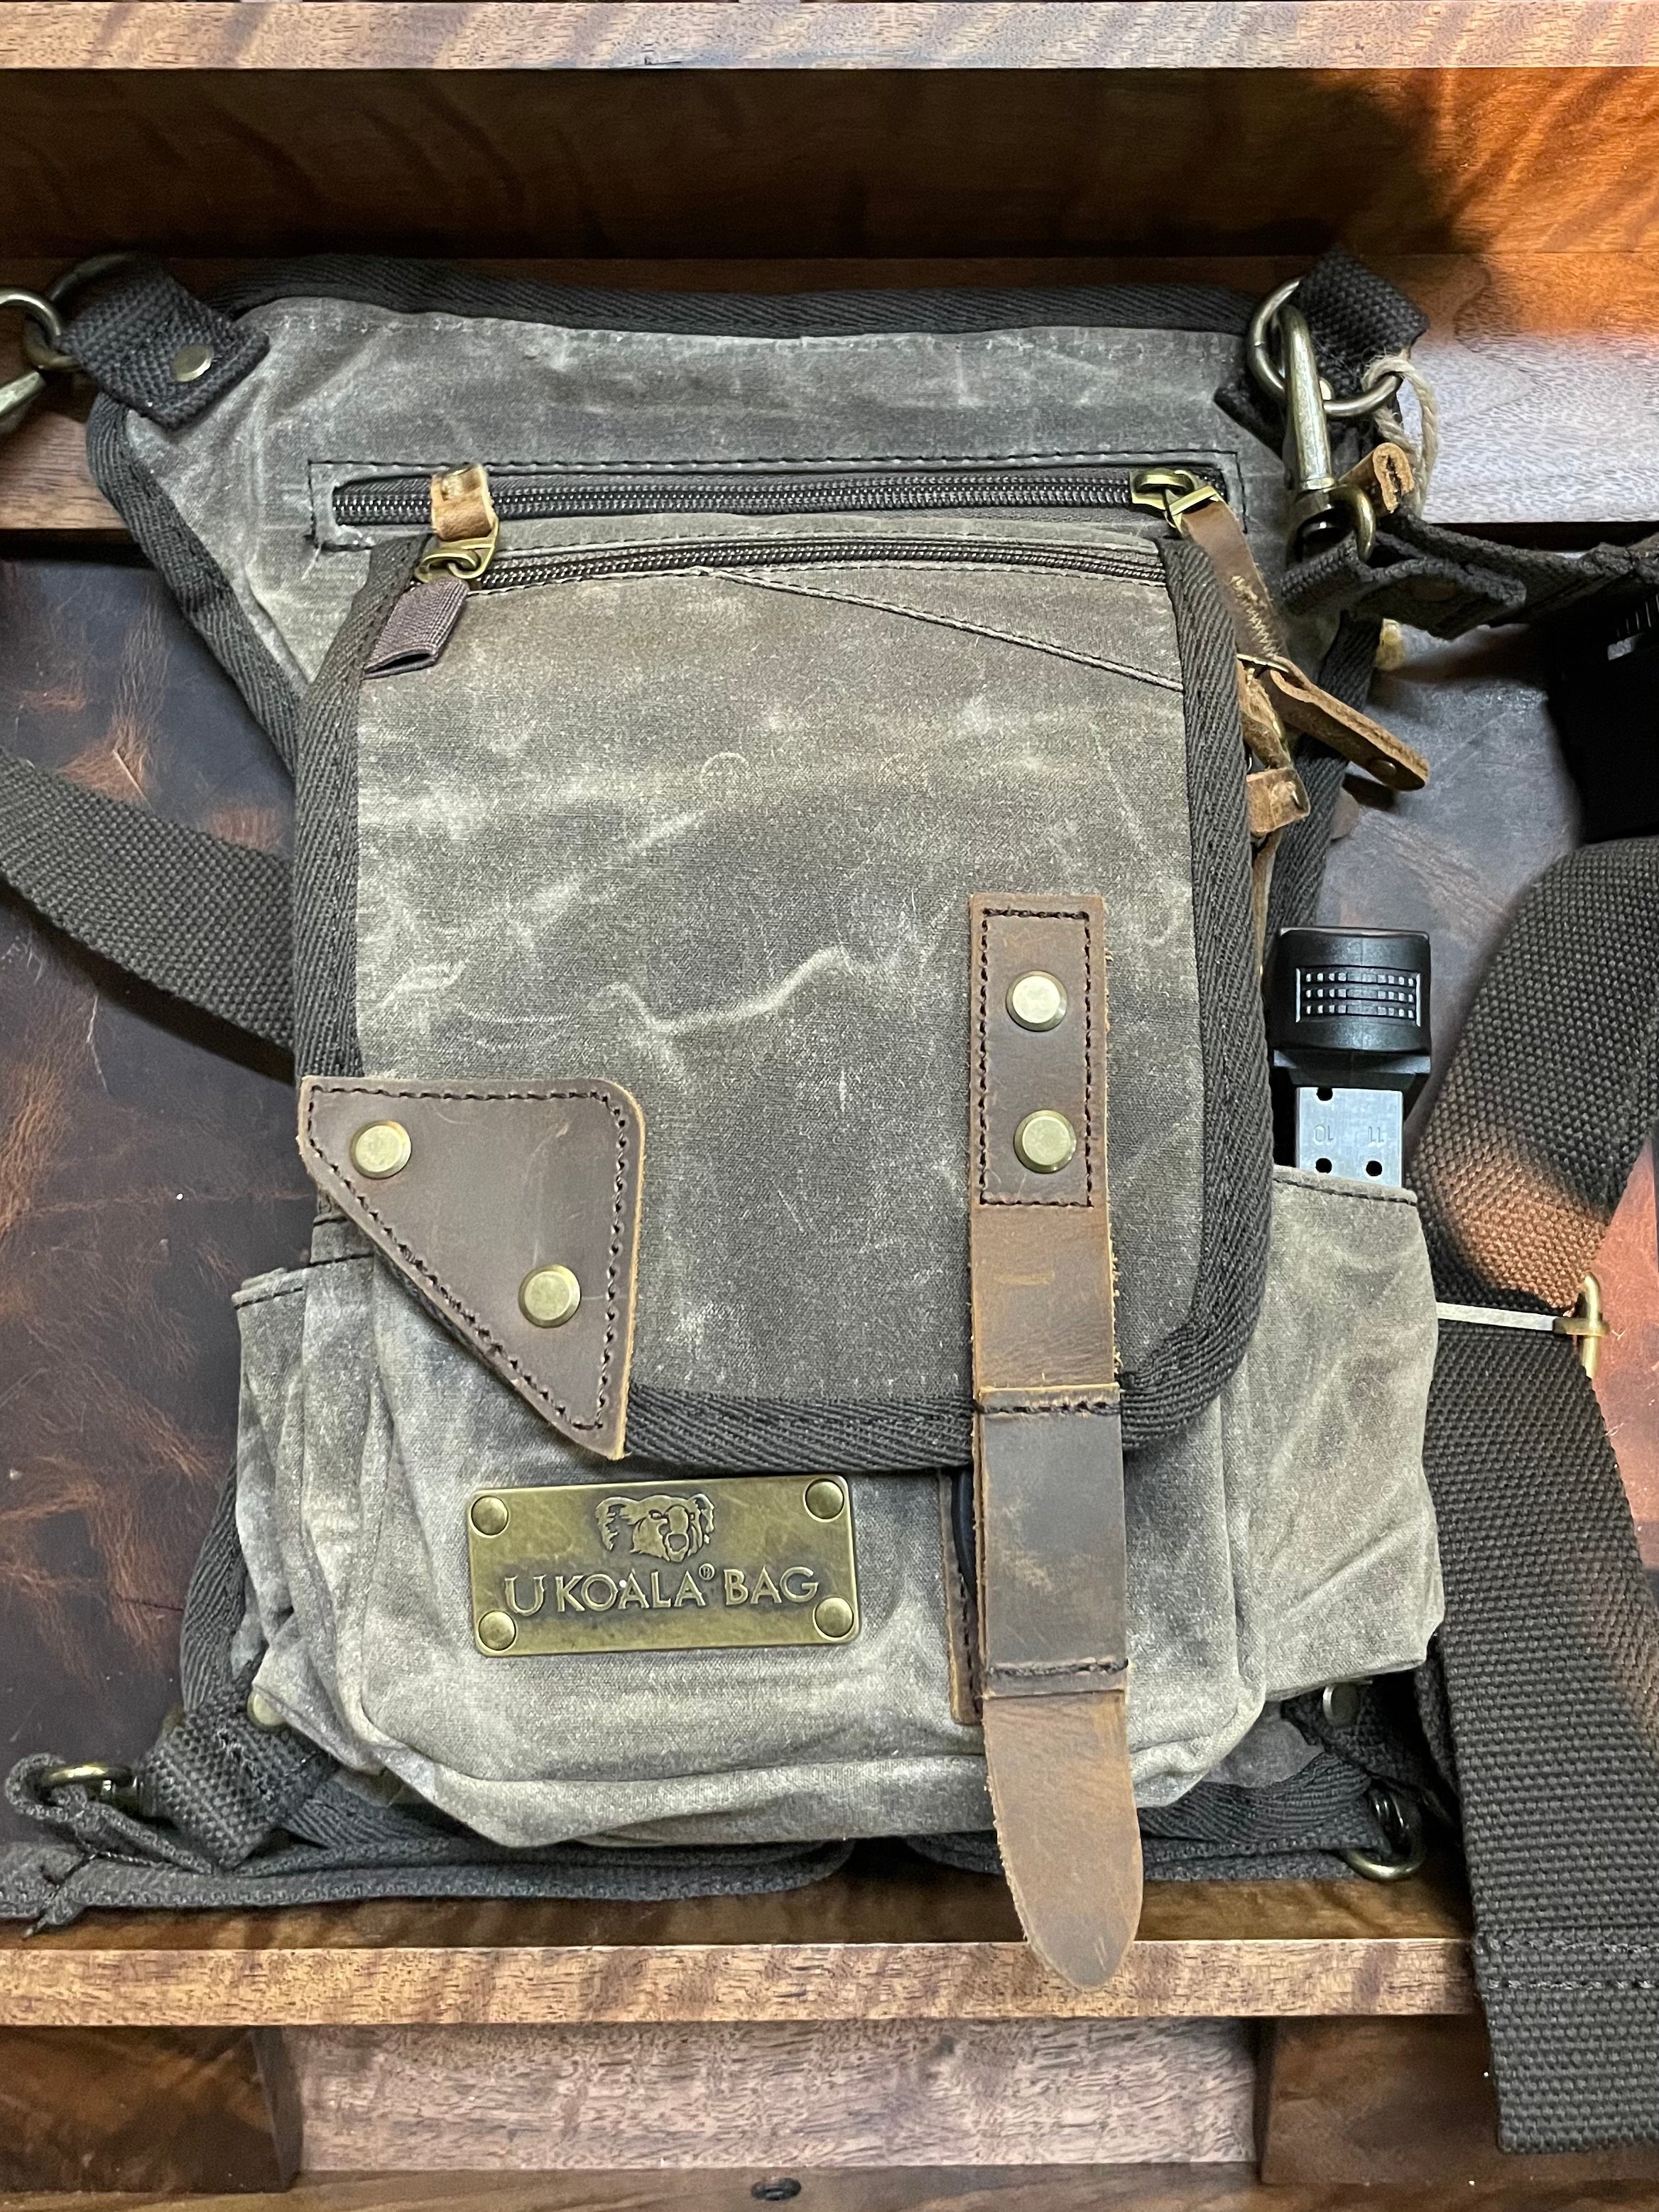 Bul Bag USA  Buy American Standard Concealed Carry Thigh Bag